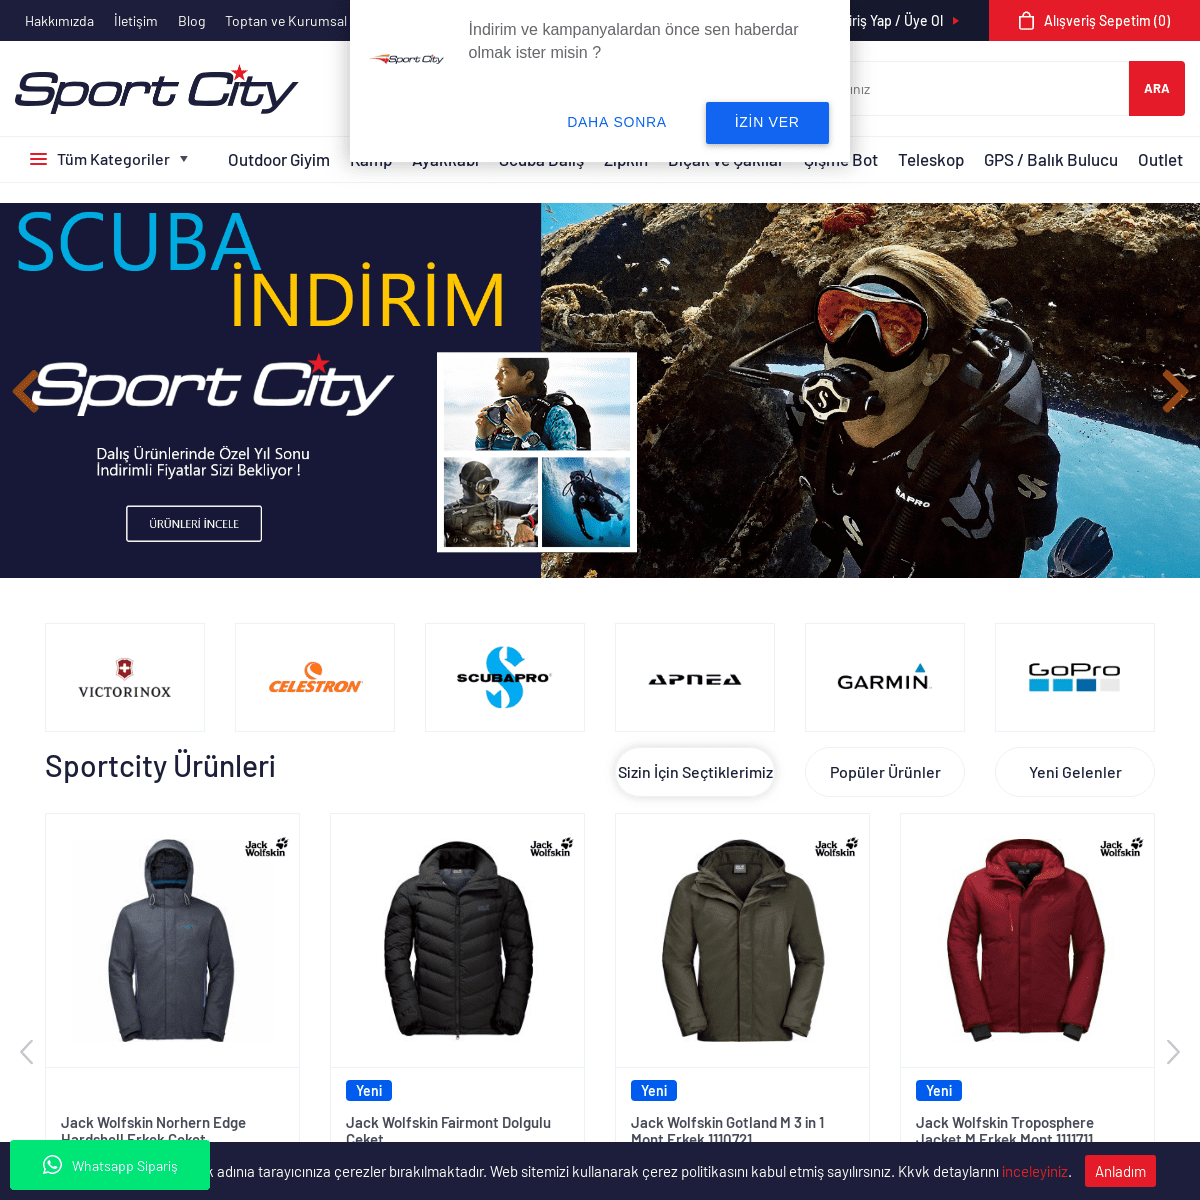 A complete backup of sportcity.com.tr